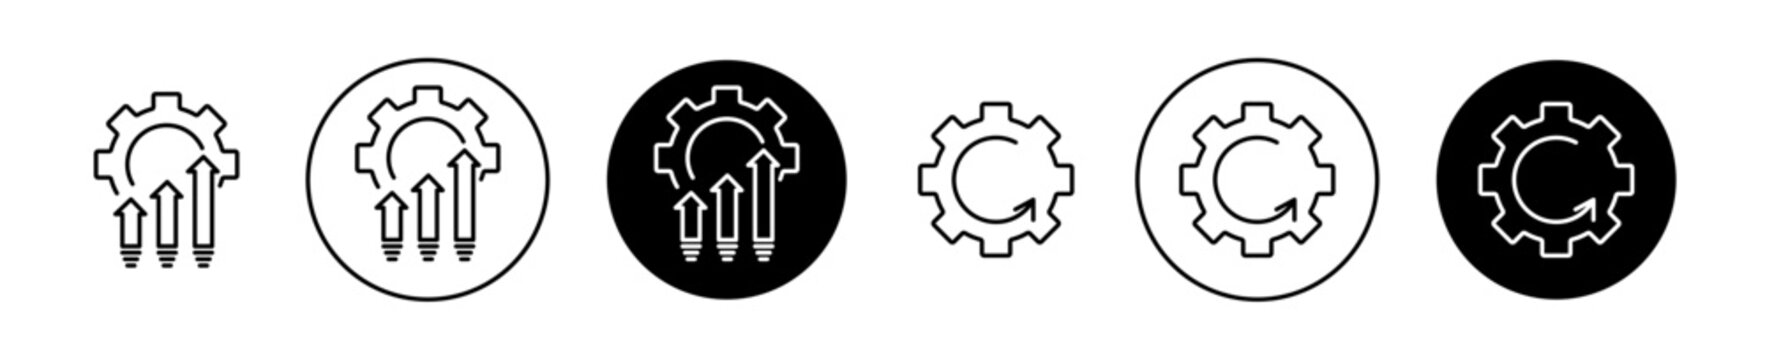 Improvement icon set. vector symbol illustration.